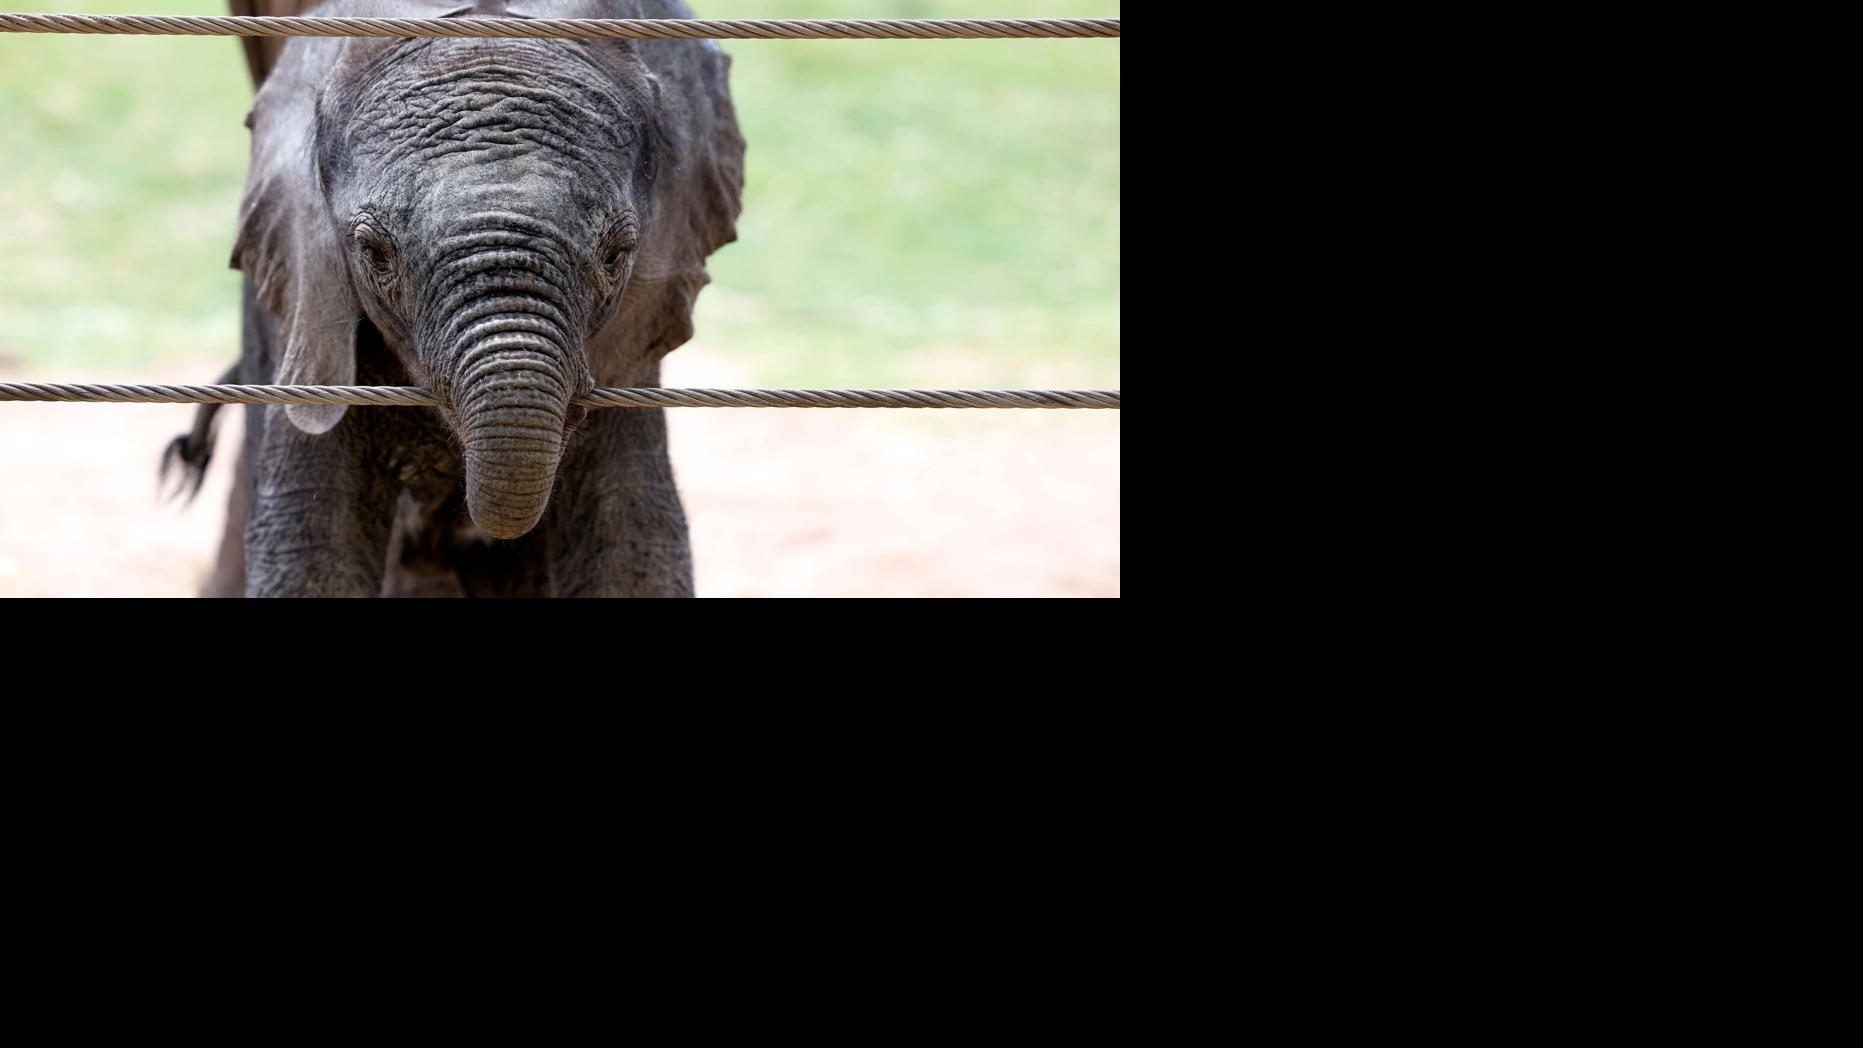 Tucson can help name Reid Park Zoo's baby elephant